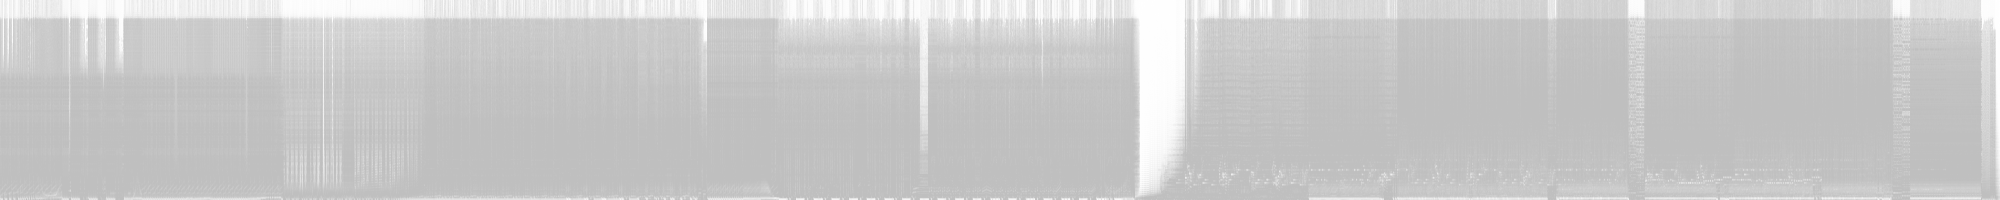 Spectrogram for Algorithm Dude - melancholy hill gets banged